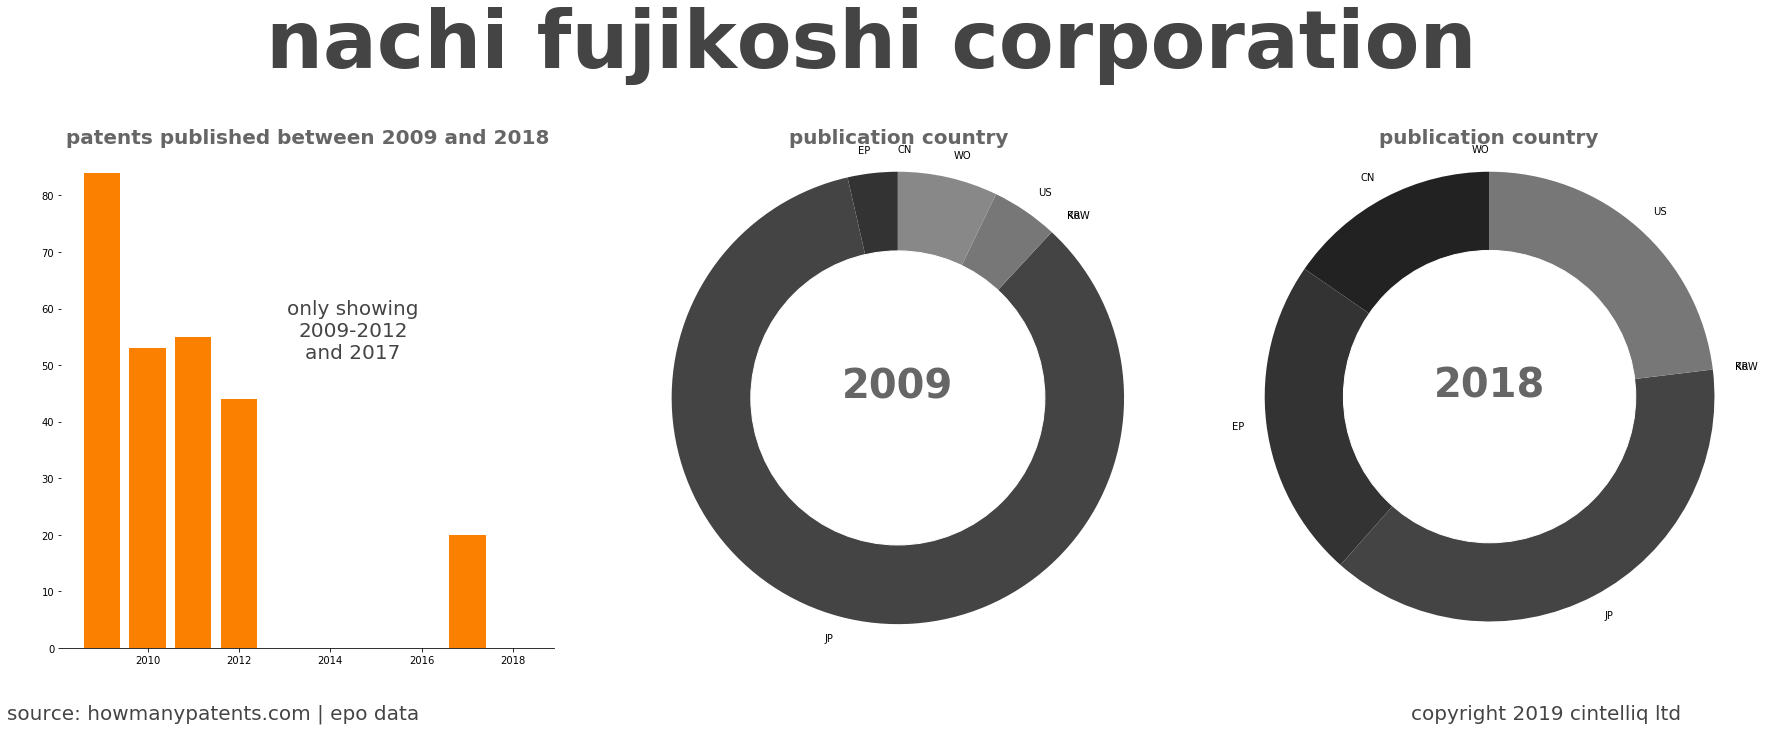 summary of patents for Nachi Fujikoshi Corporation